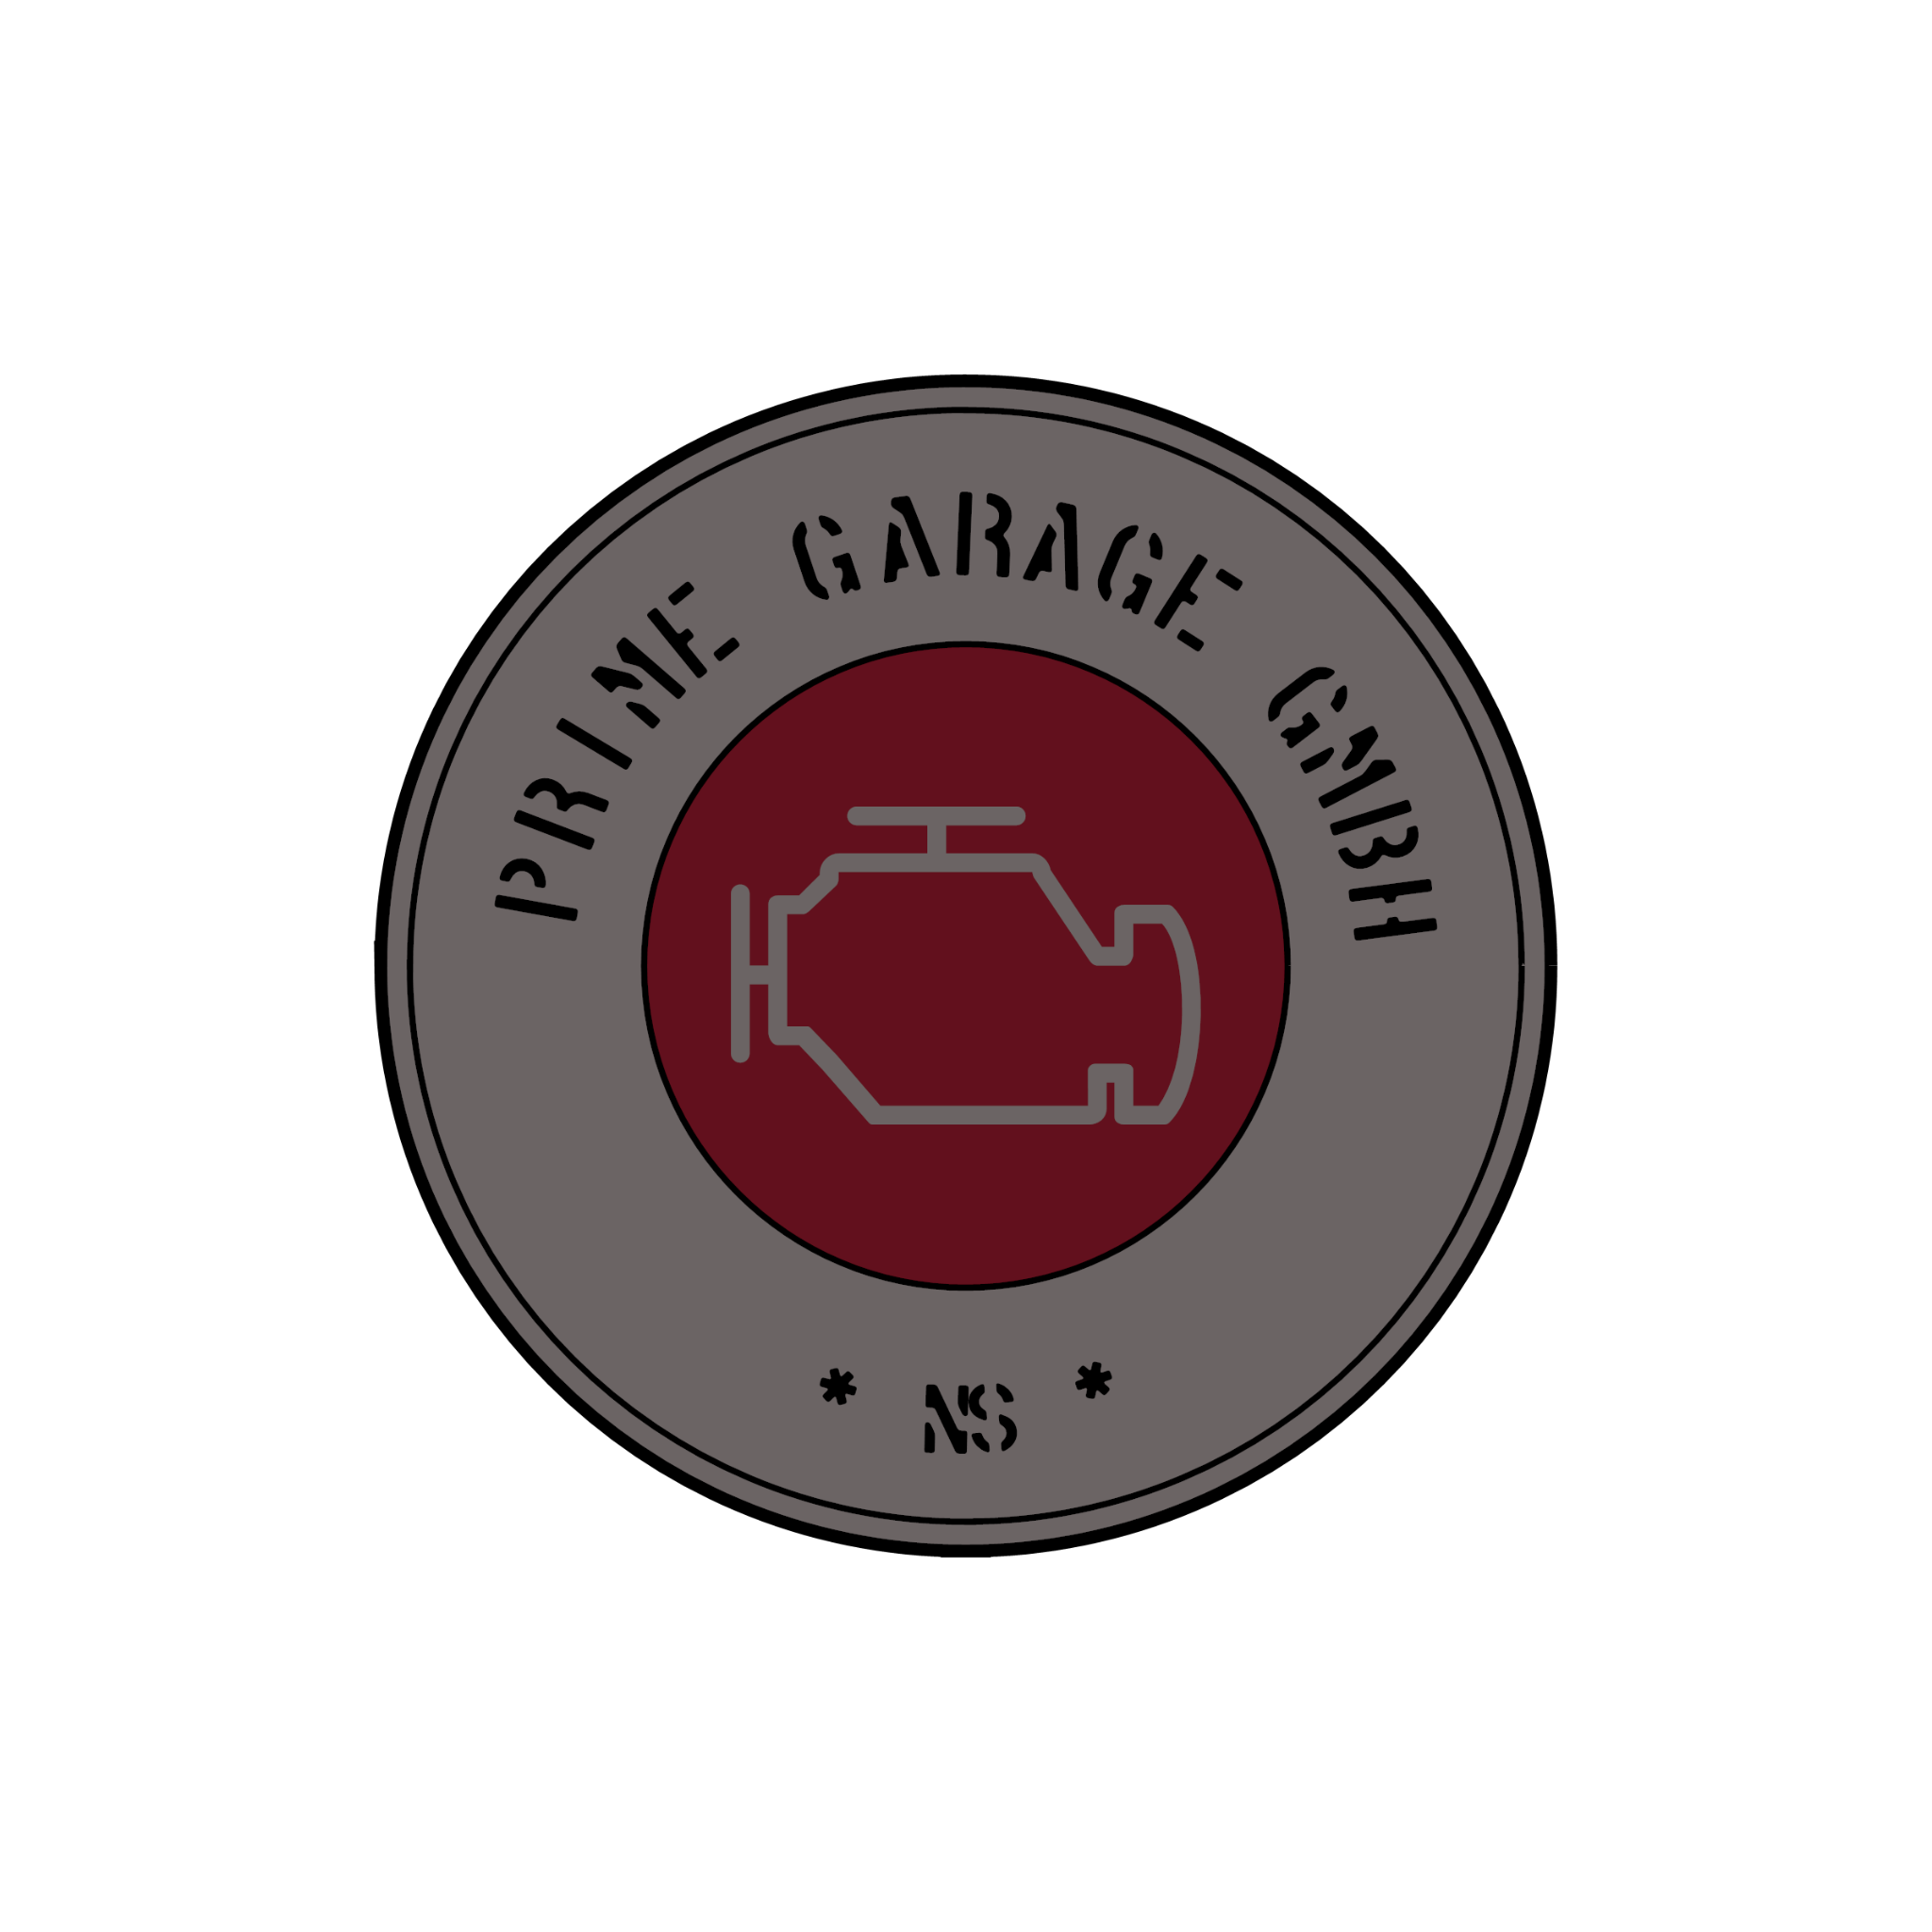 Prime Garage GmbH